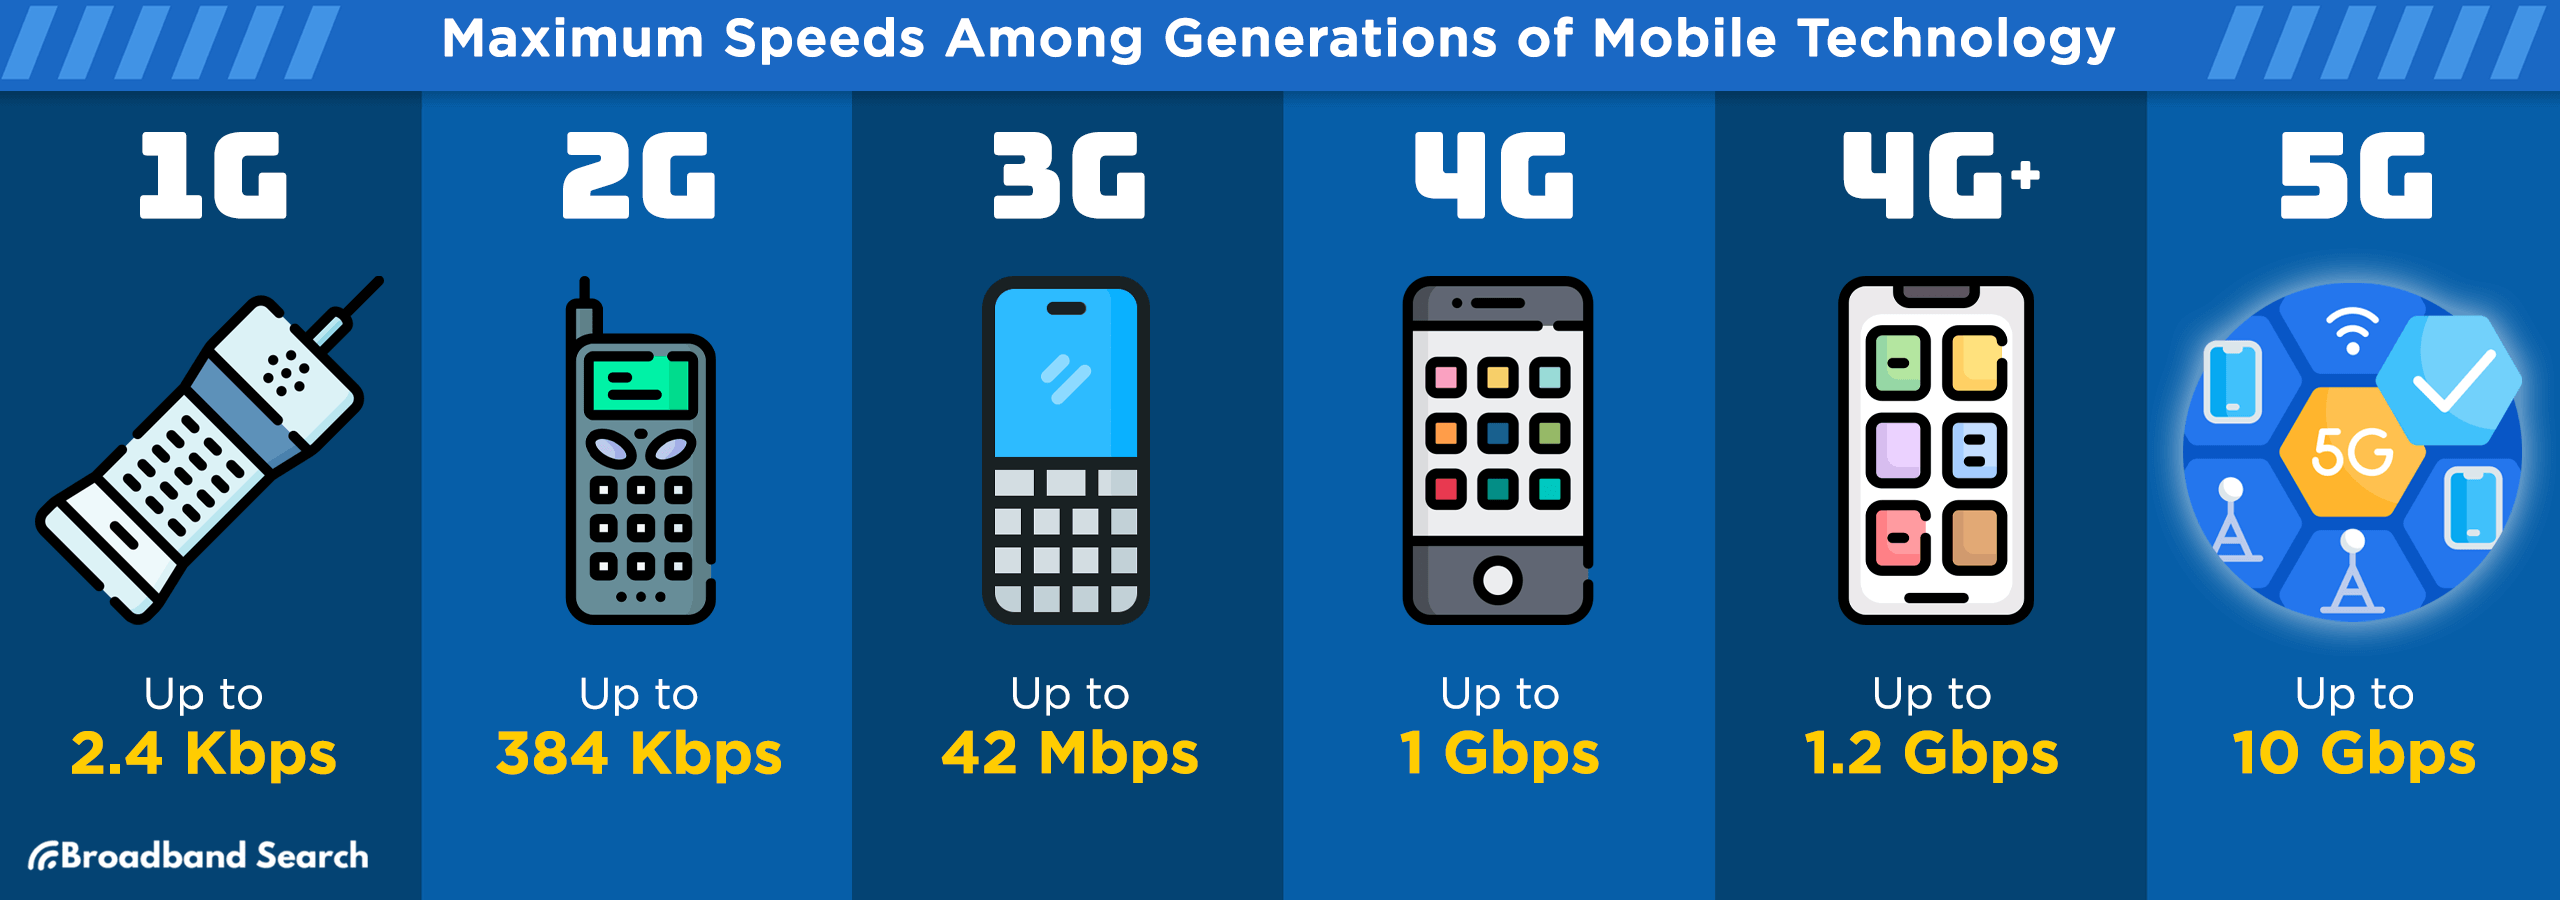 Maximum speeds among generations of mobile technology